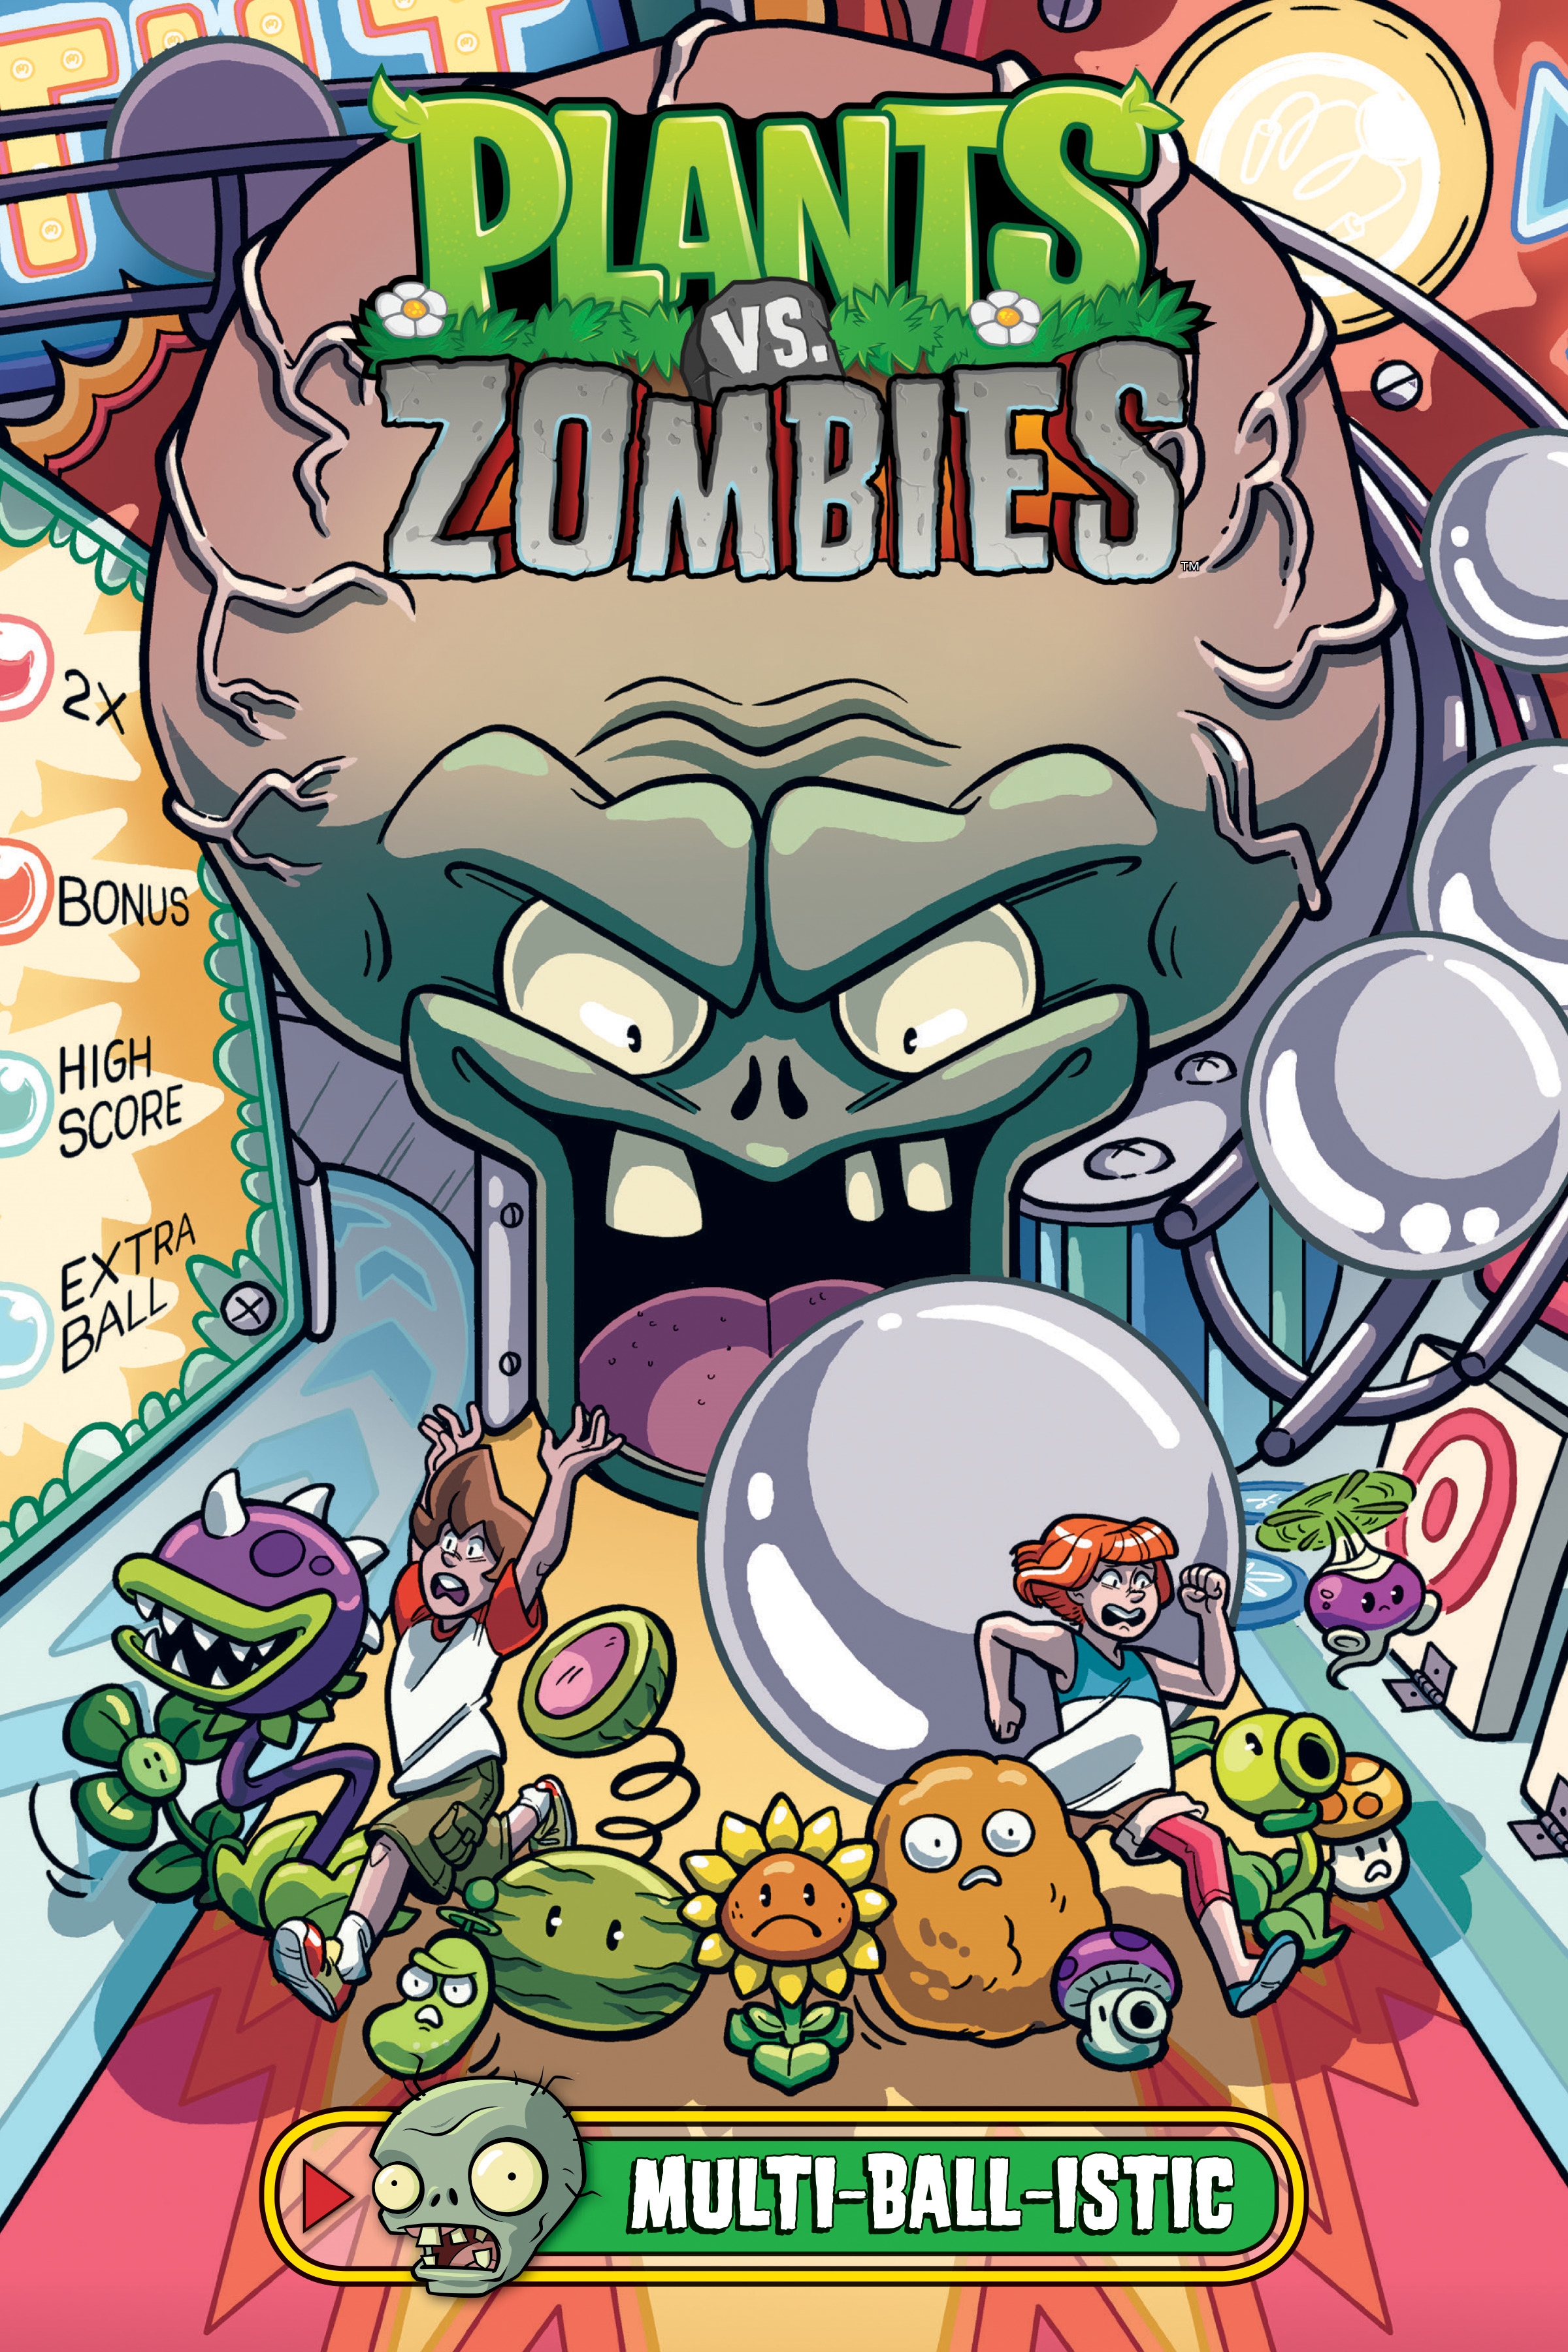 plants vs zombies 2 free download pc popcap games